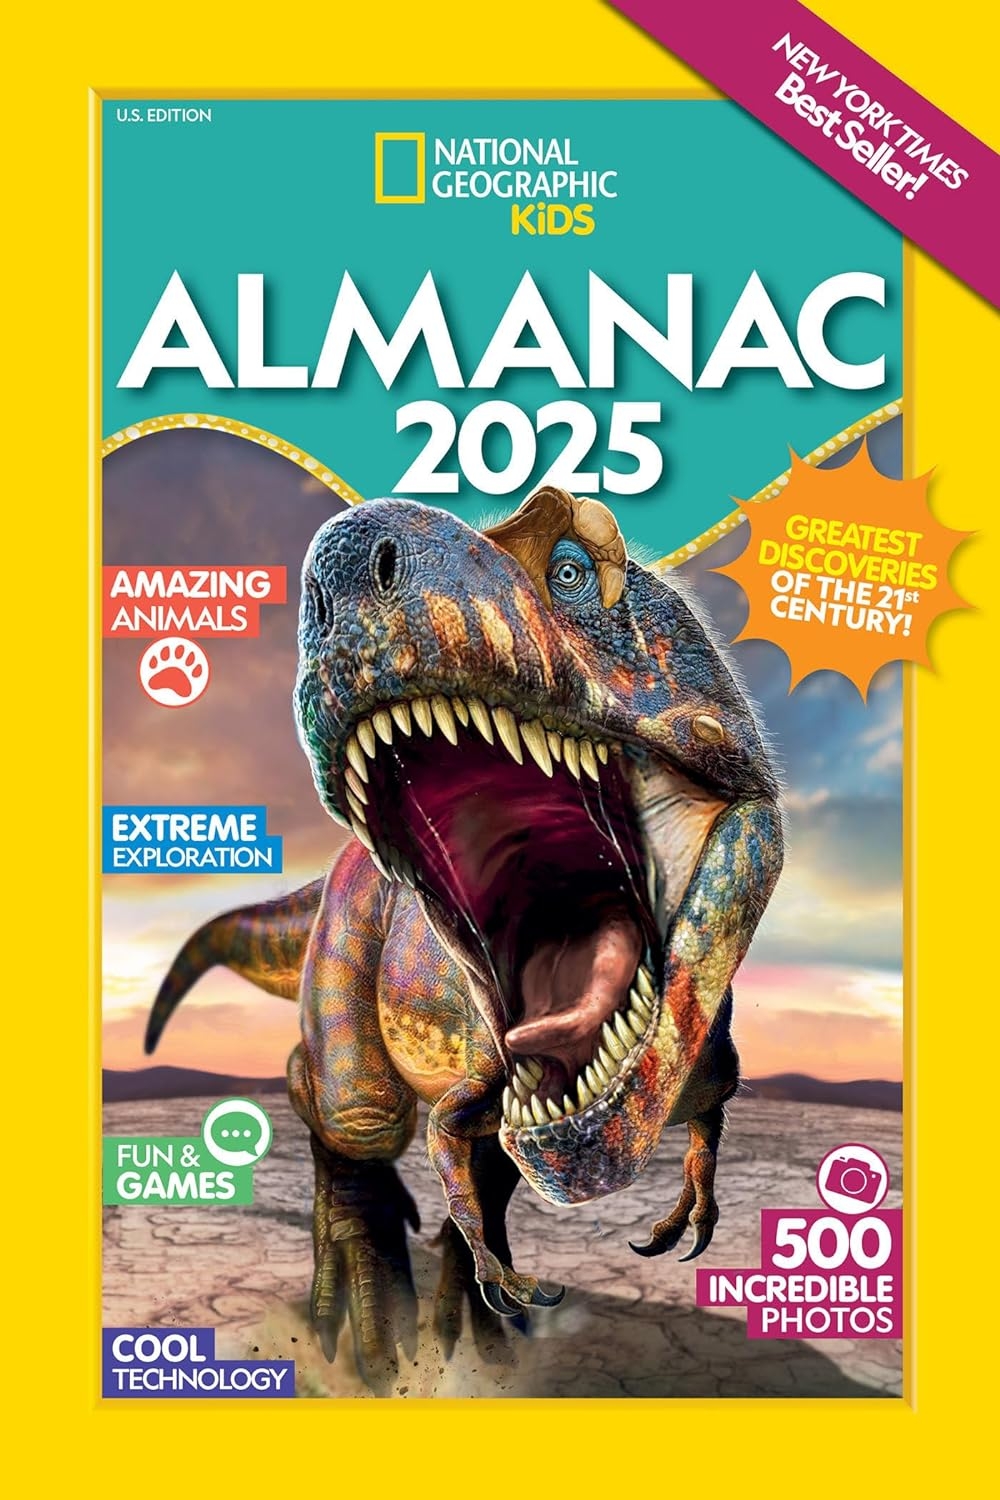 國家地理雜誌兒童版最新2025年鑑National Geographic Kids Almanac 2025 (International Edition)